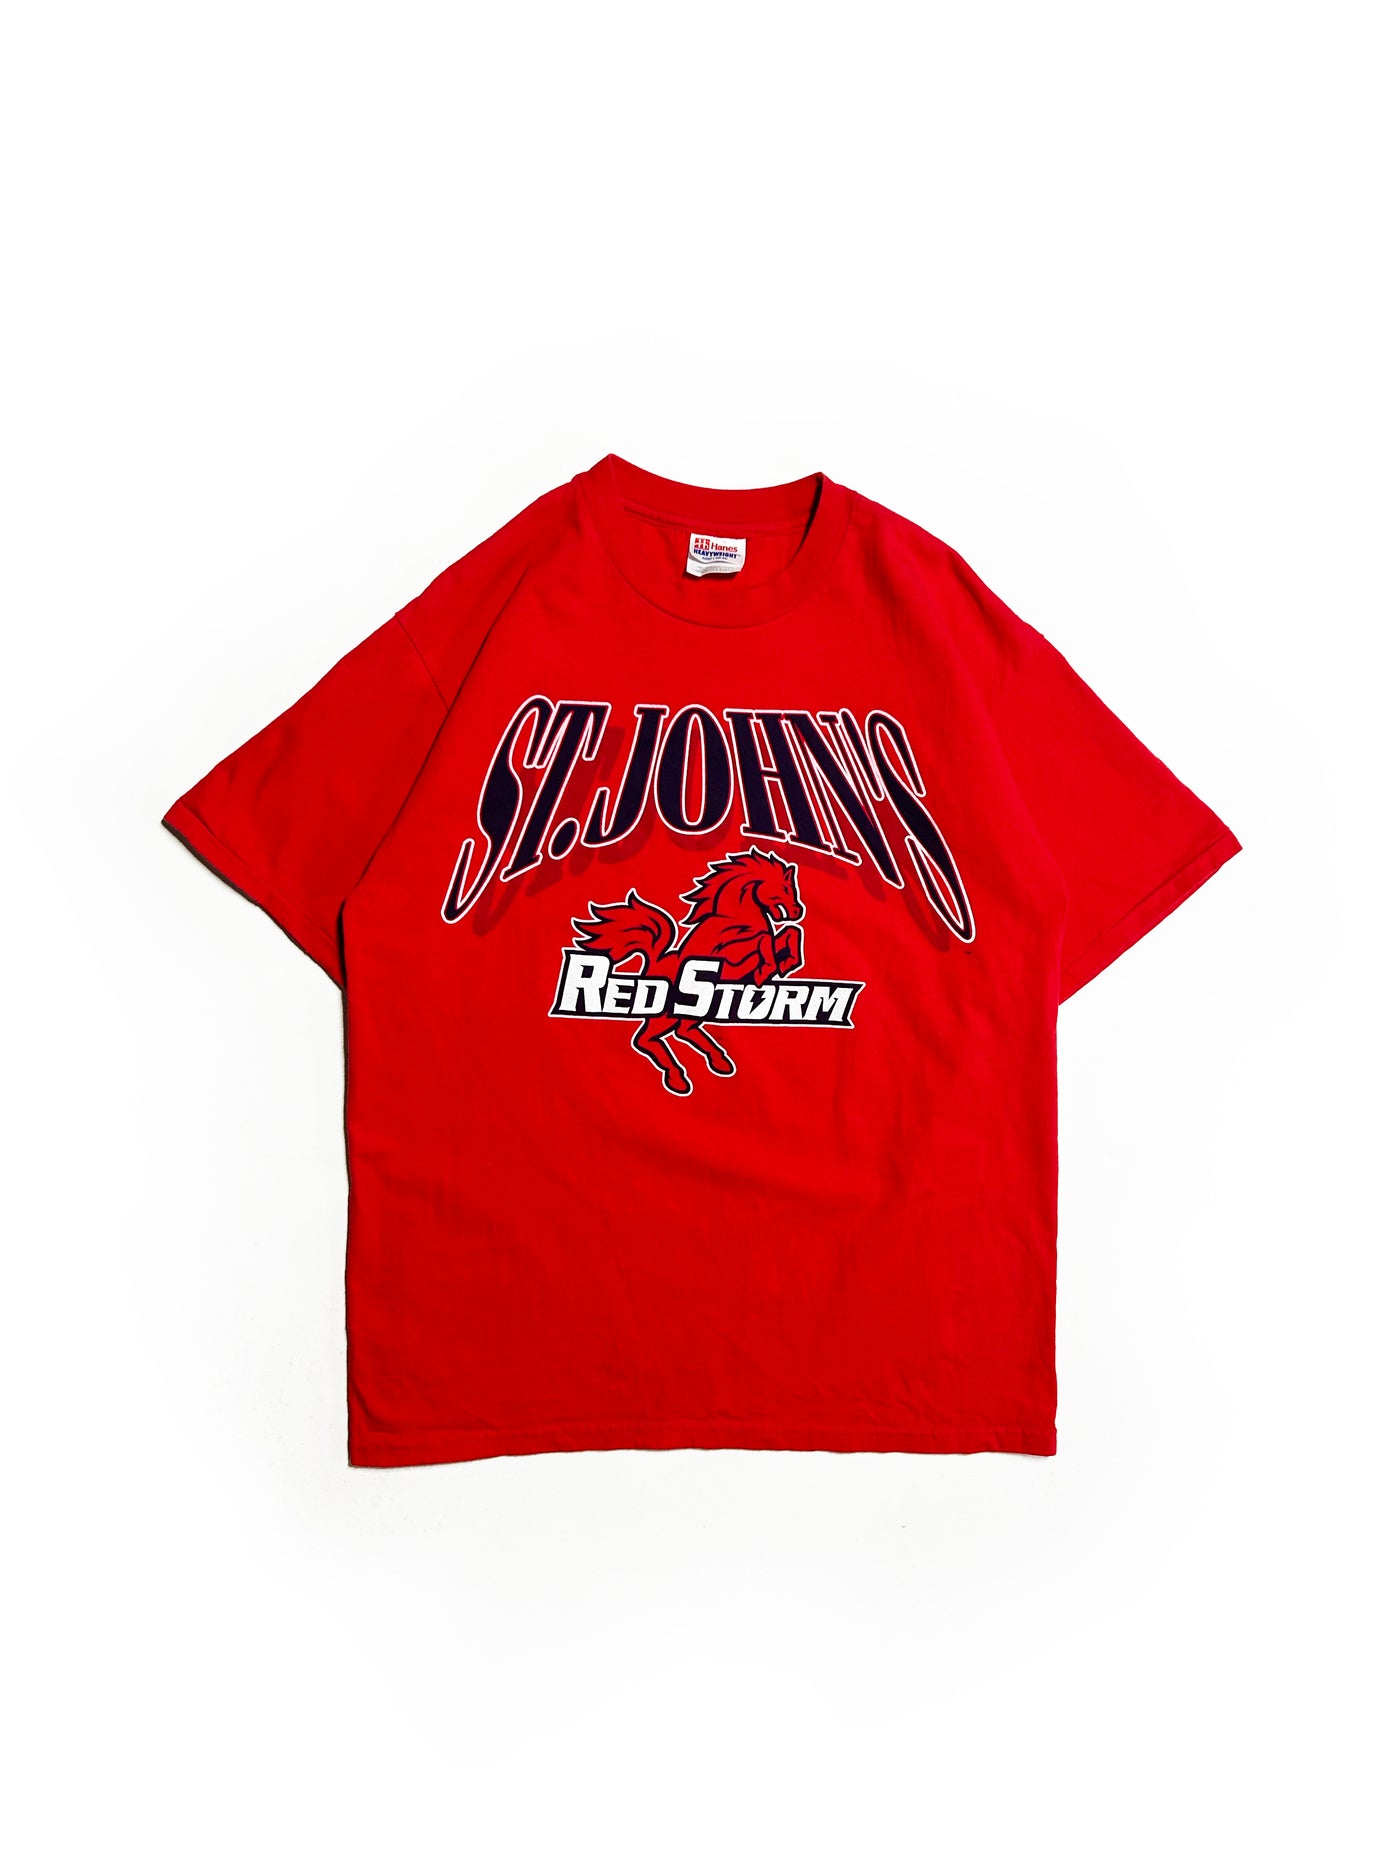 Vintage 90s St.John’s Red Storm Logo T-Shirt